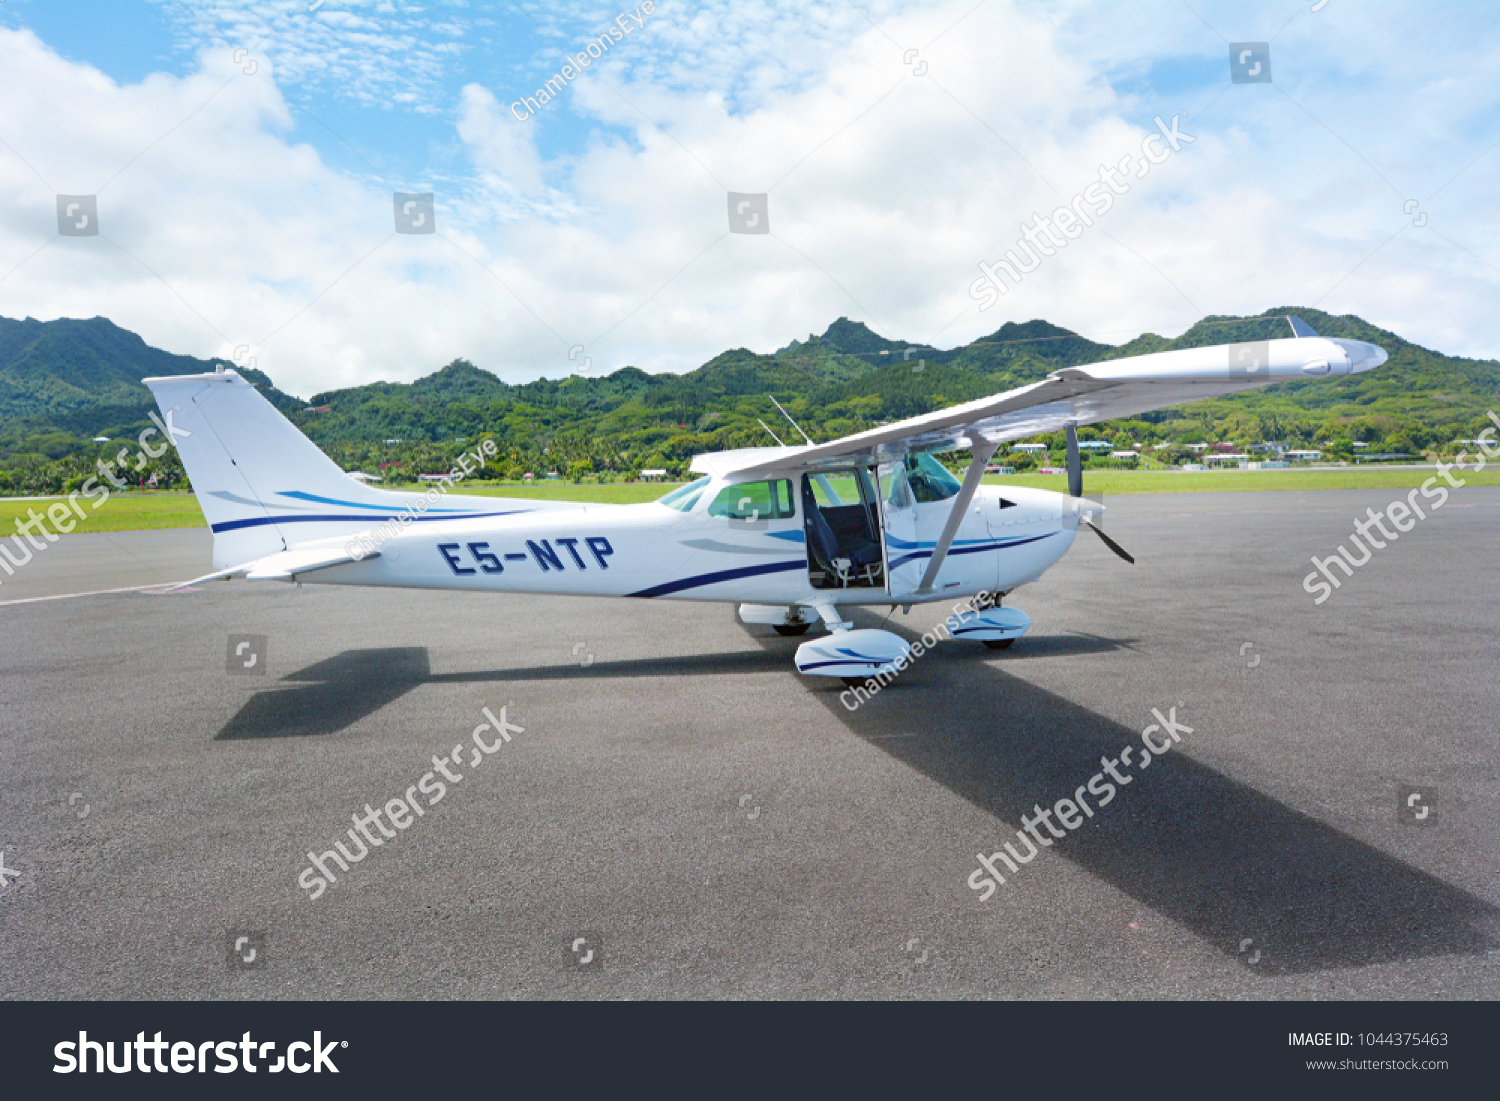 18.18 Cessna Bilder, Stockfotos und Vektorgrafiken   Shutterstock